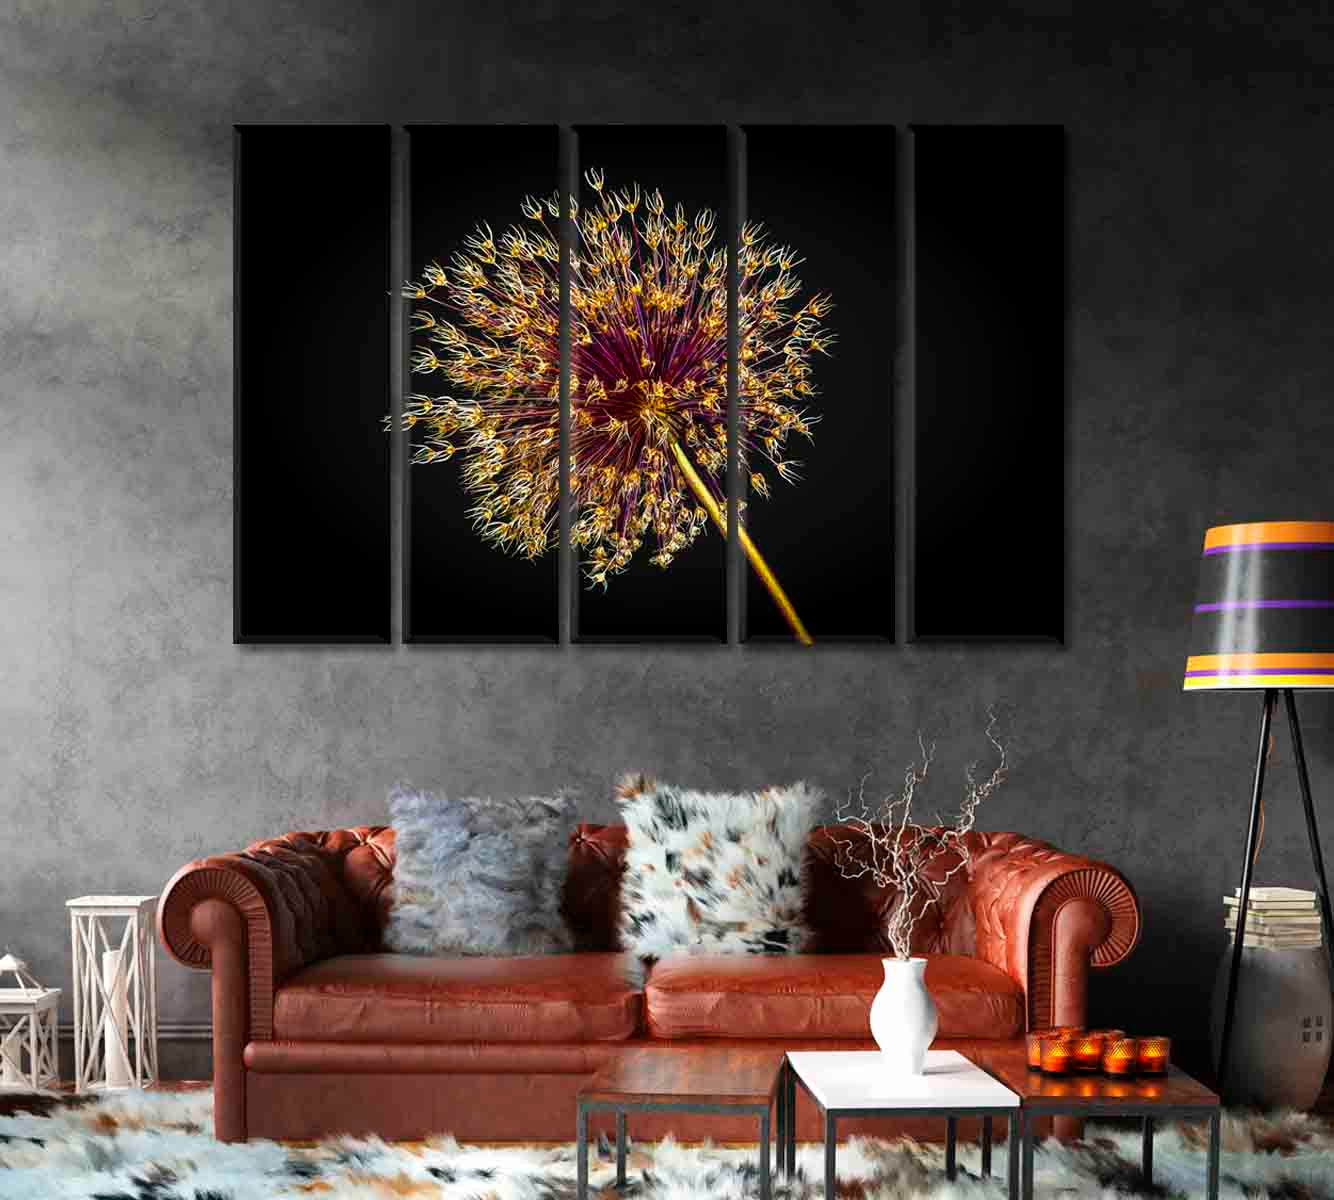 Dried Allium Flower Canvas Print-Canvas Print-CetArt-1 Panel-24x16 inches-CetArt